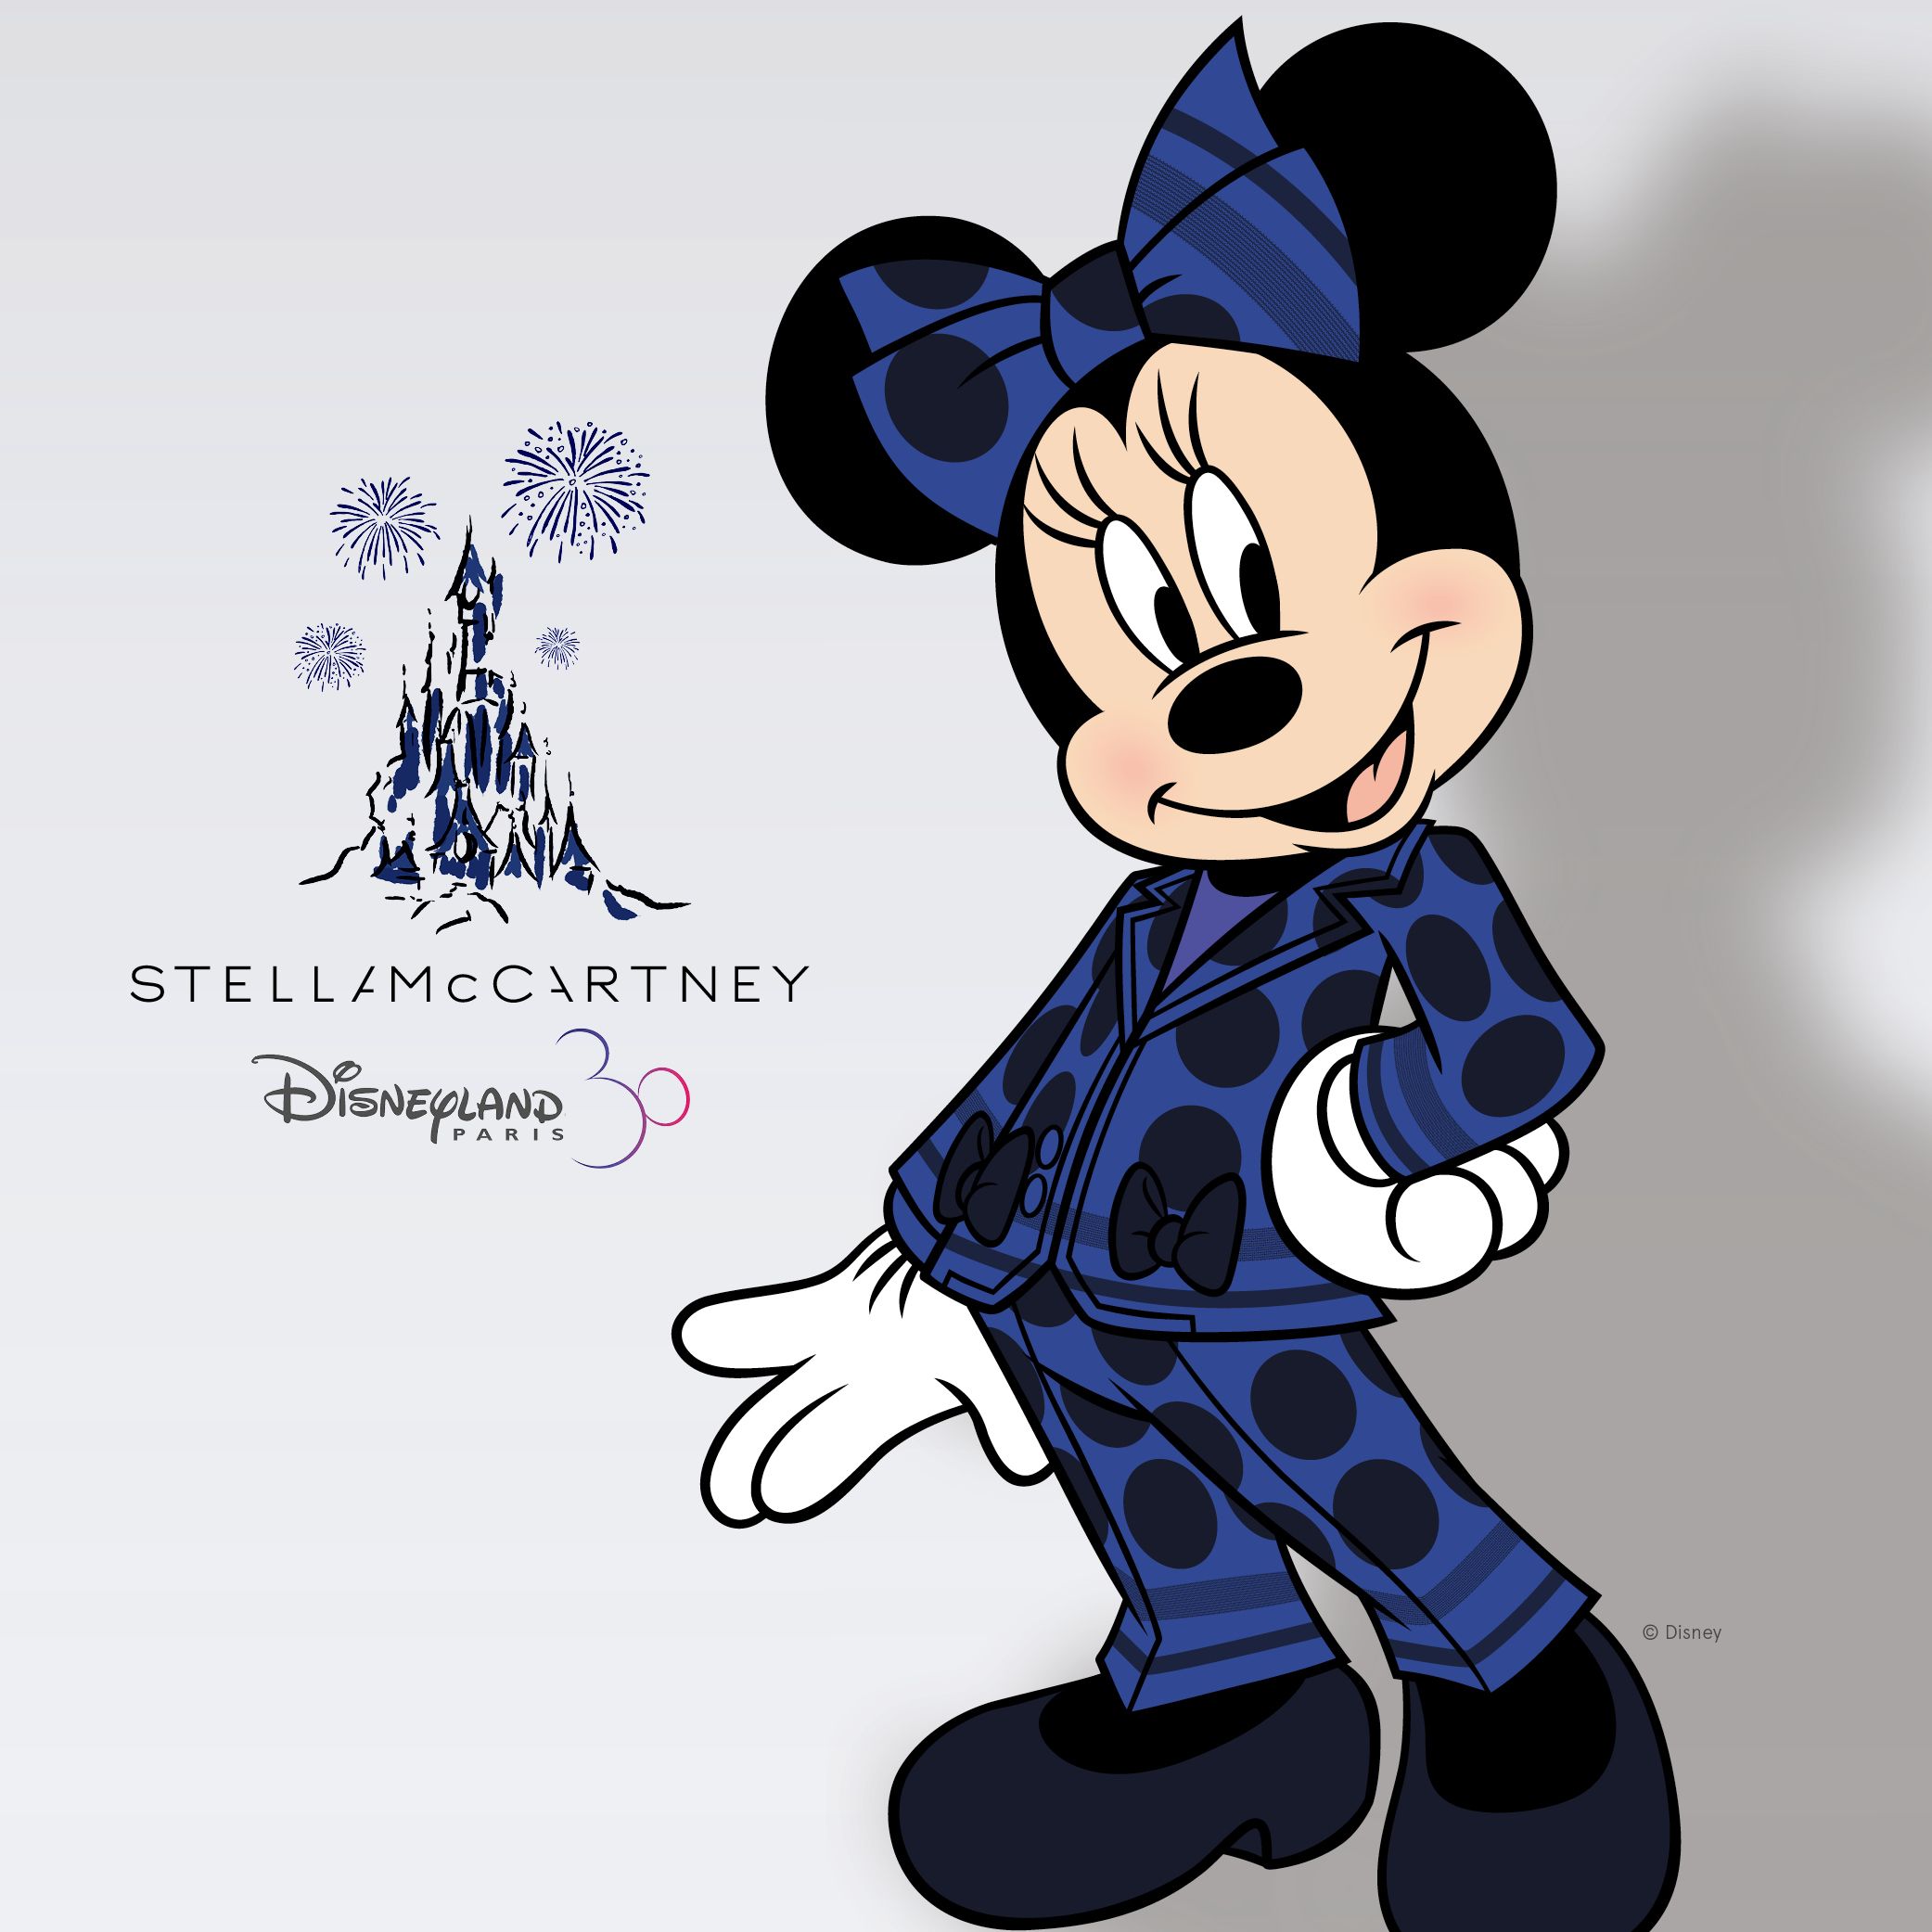 Por primera vez, Minnie Mouse va a usar pantalones | Diario de Cultura